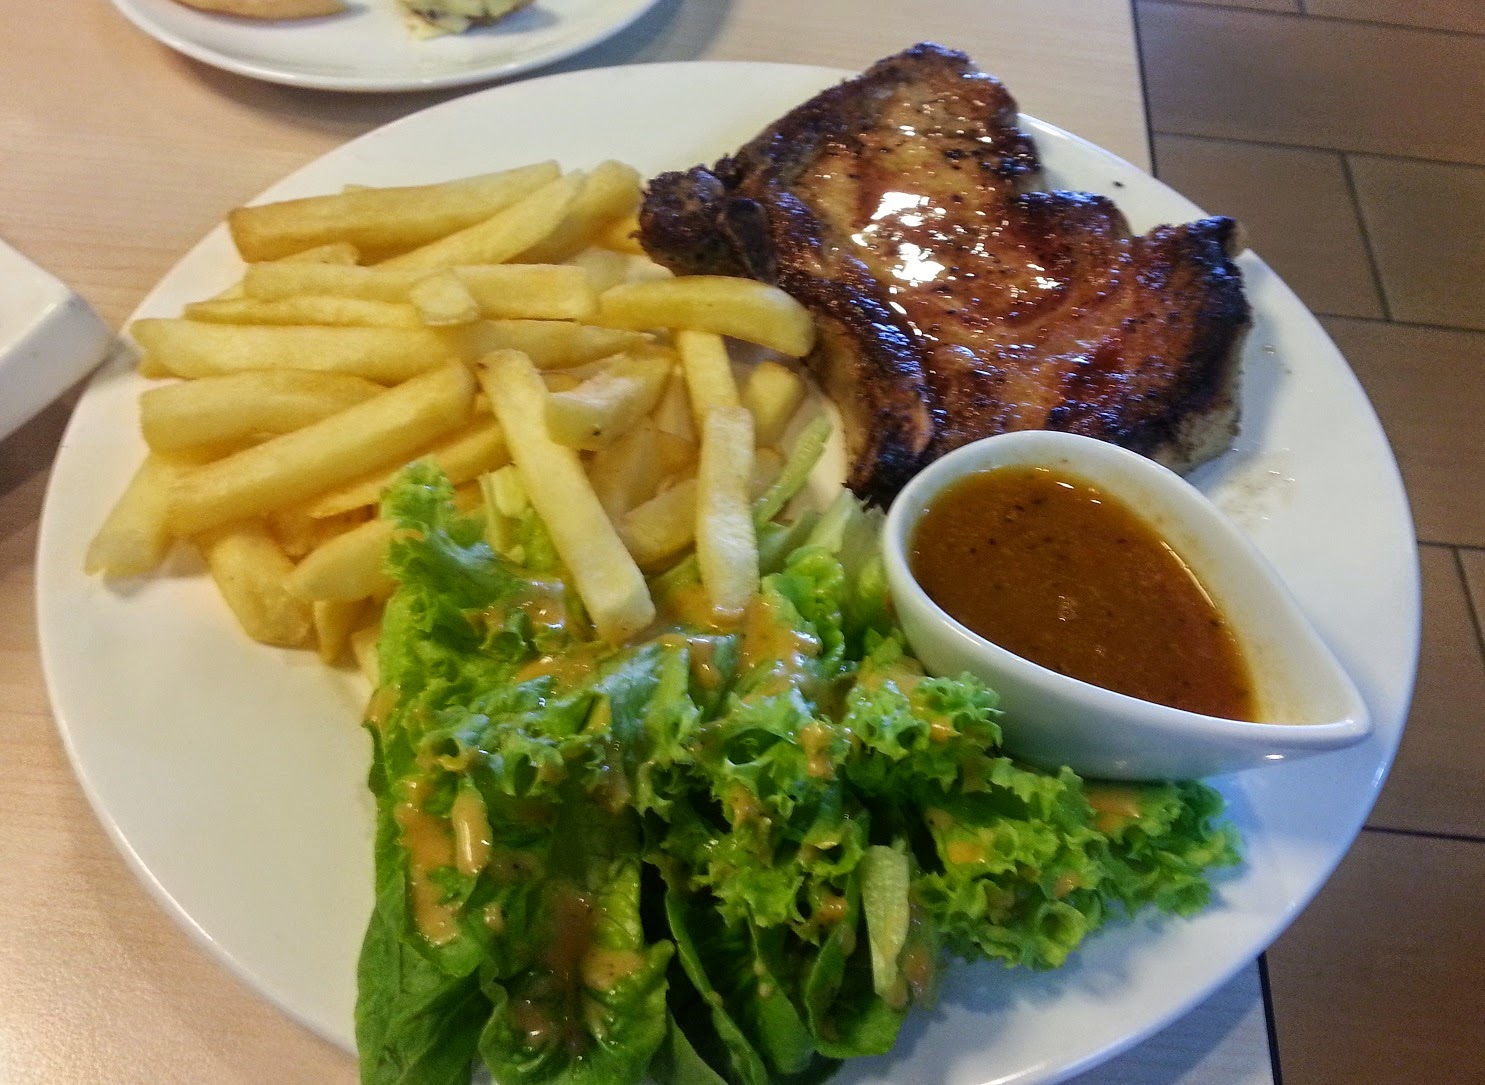 foodjourney4me: All Things Pork @ Sanbanto Cafe, SS 2